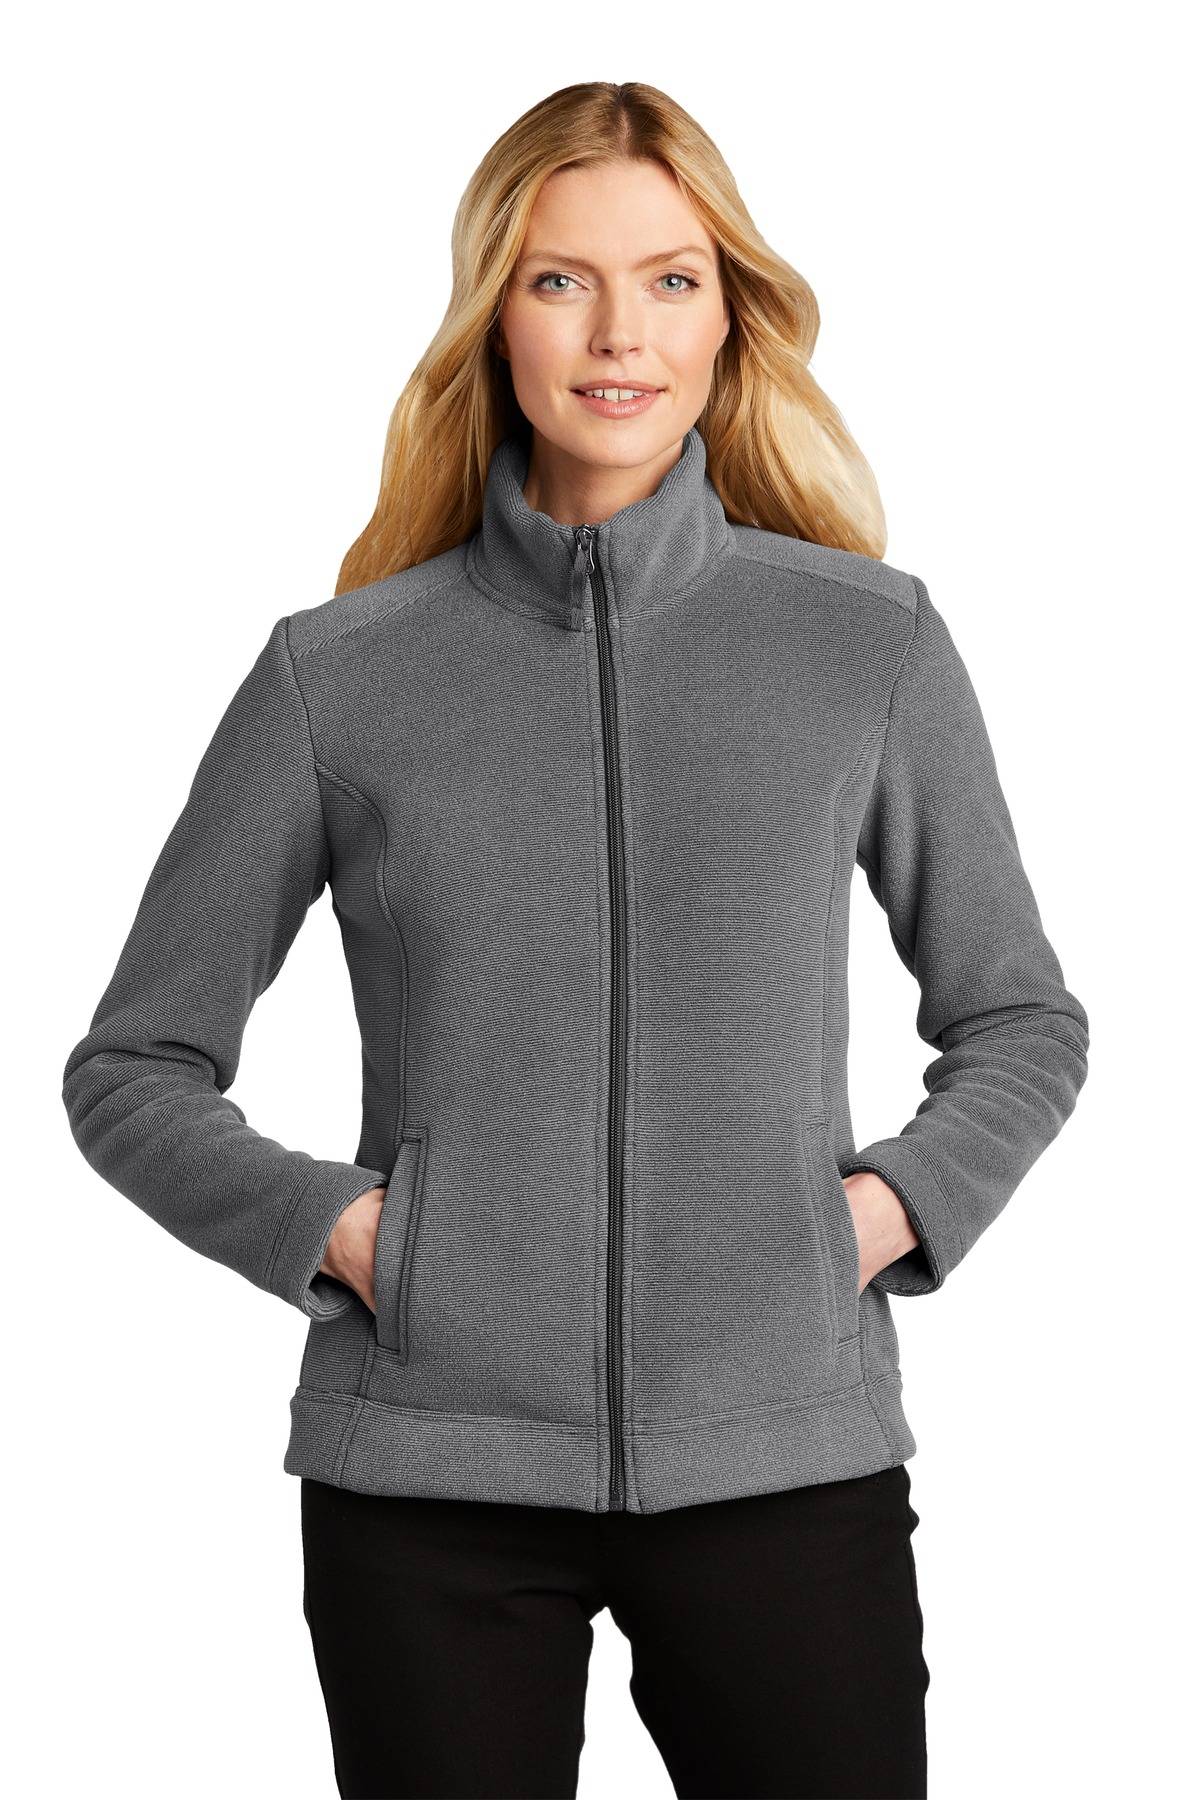 Port Authority L211 Ladies Ultra Warm Brushed Fleece Jacket in Best Price